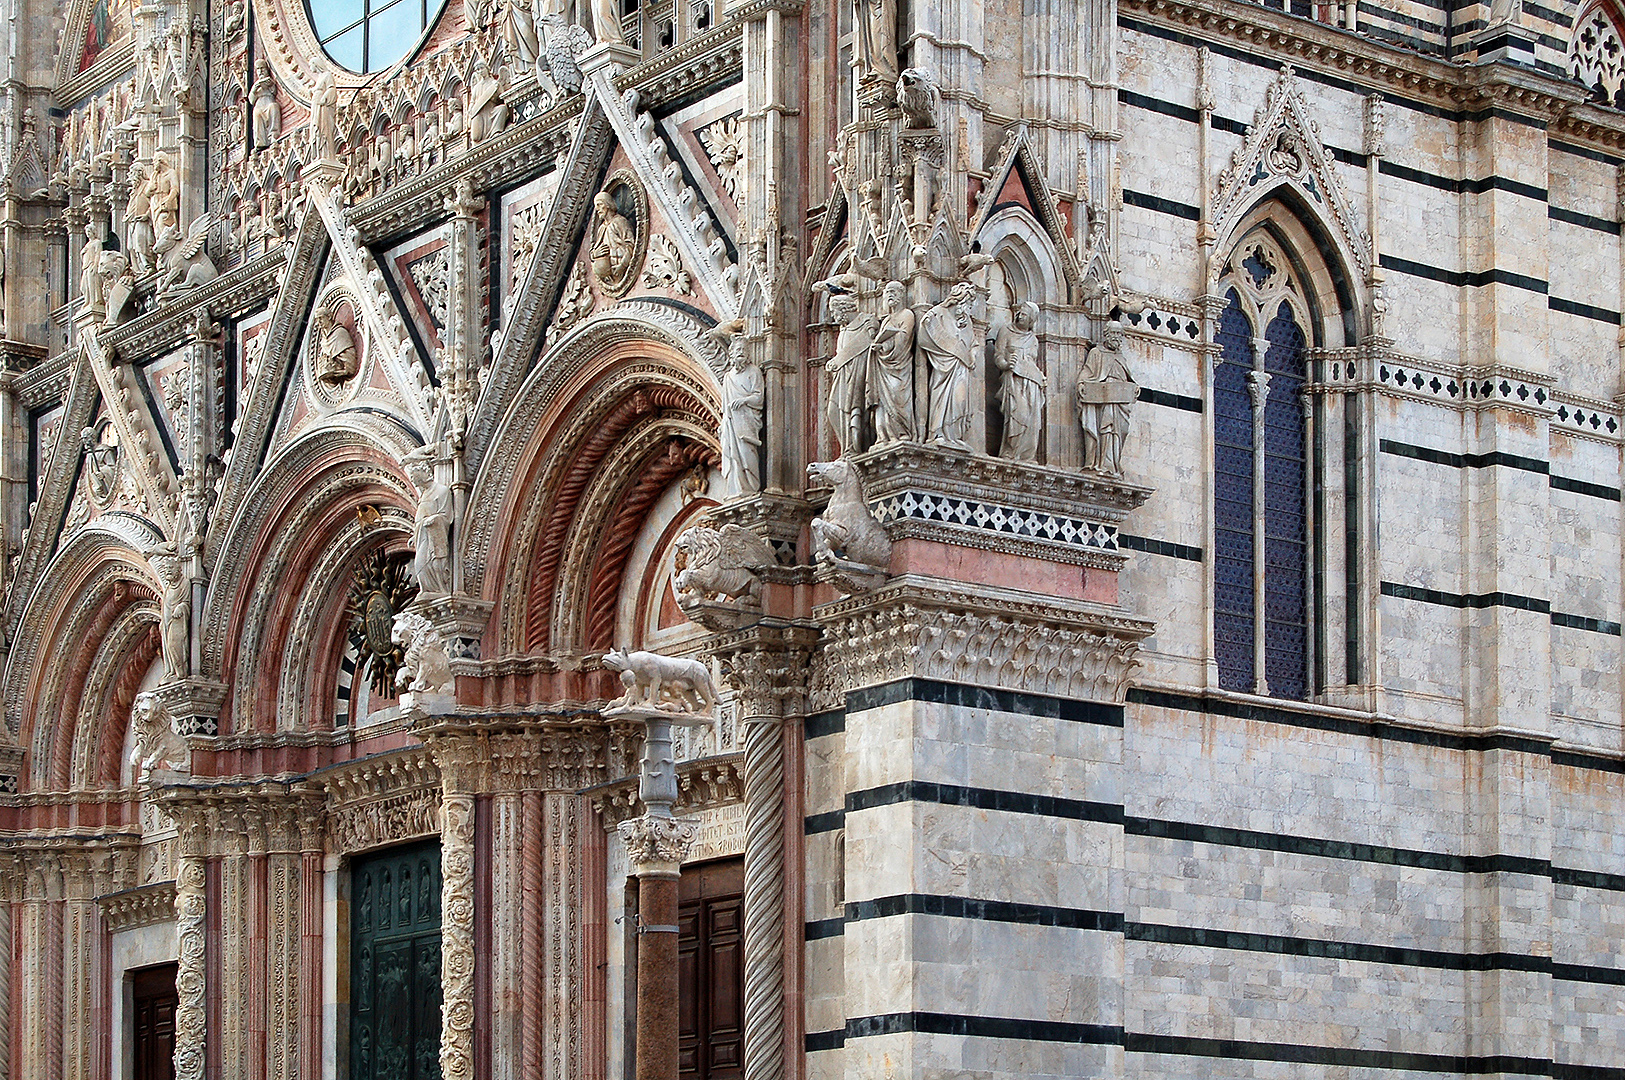 Kathedraal van Siena (Toscane, Italië); Siena Cathedral, Tuscany, Italy